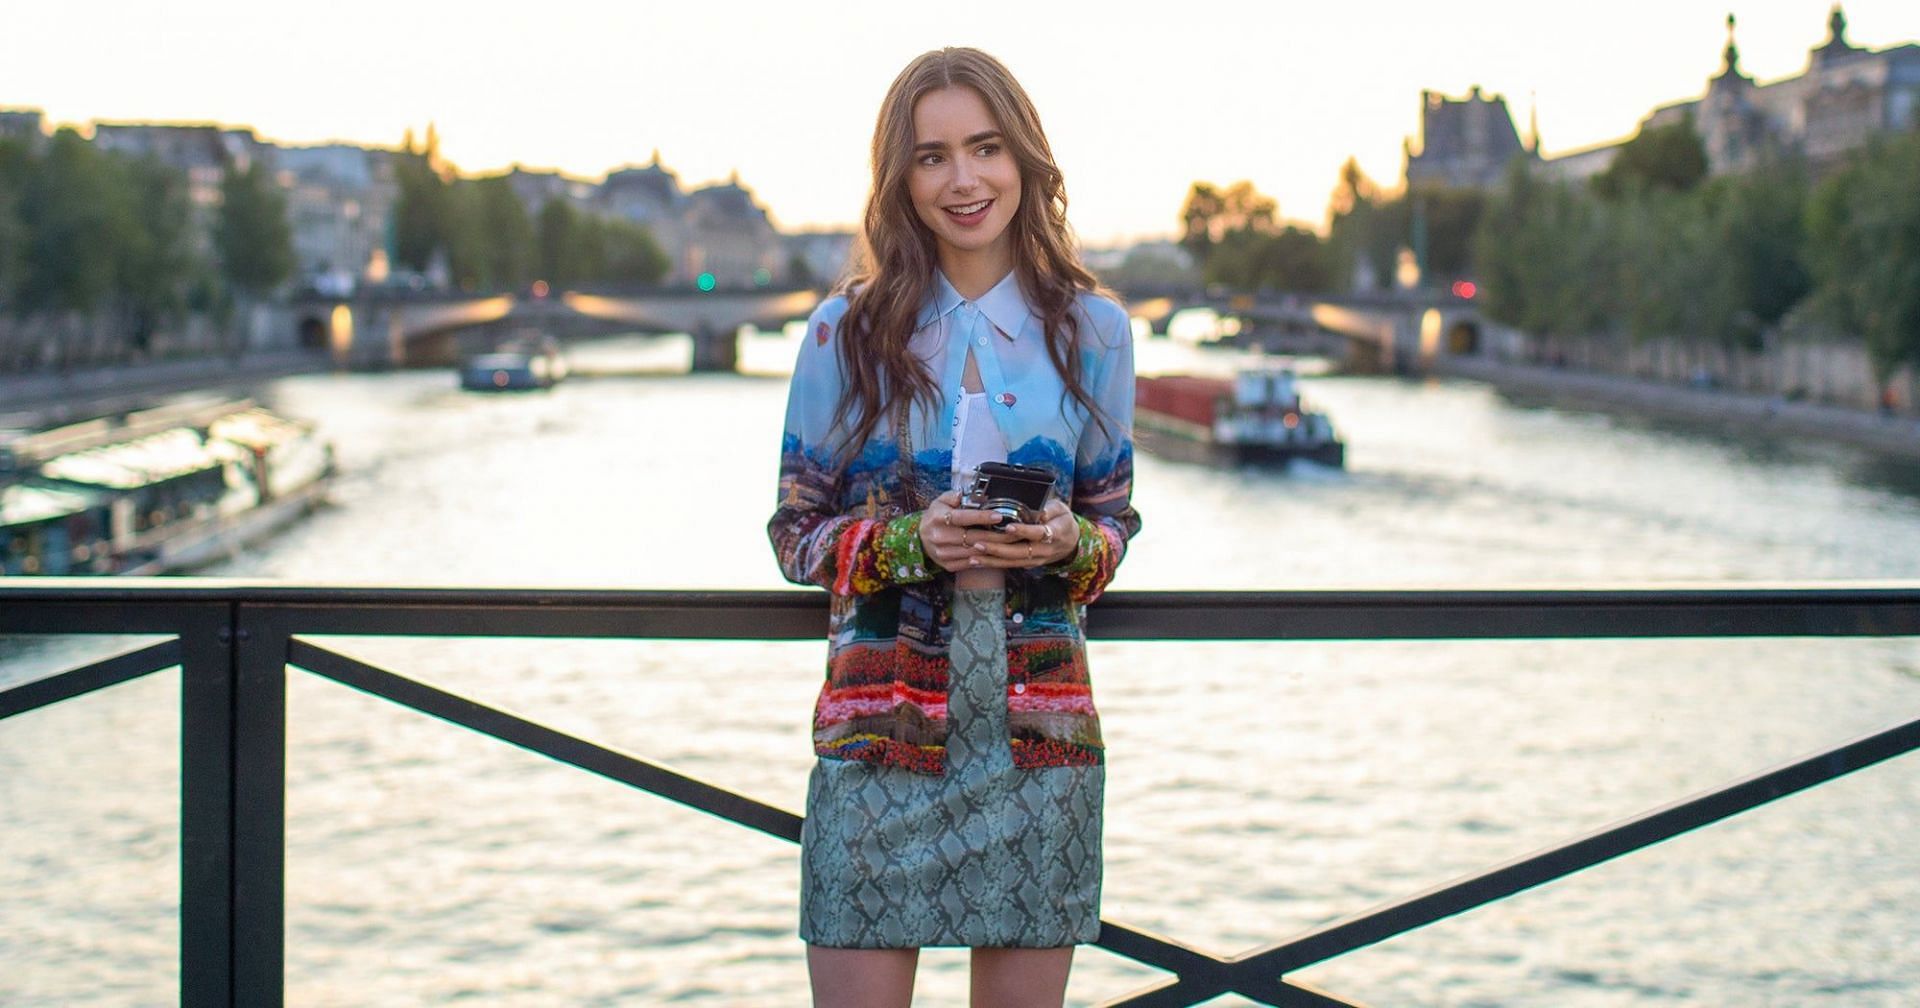 Emily In Paris' Season 3: Release Date, Cast, Photos, More